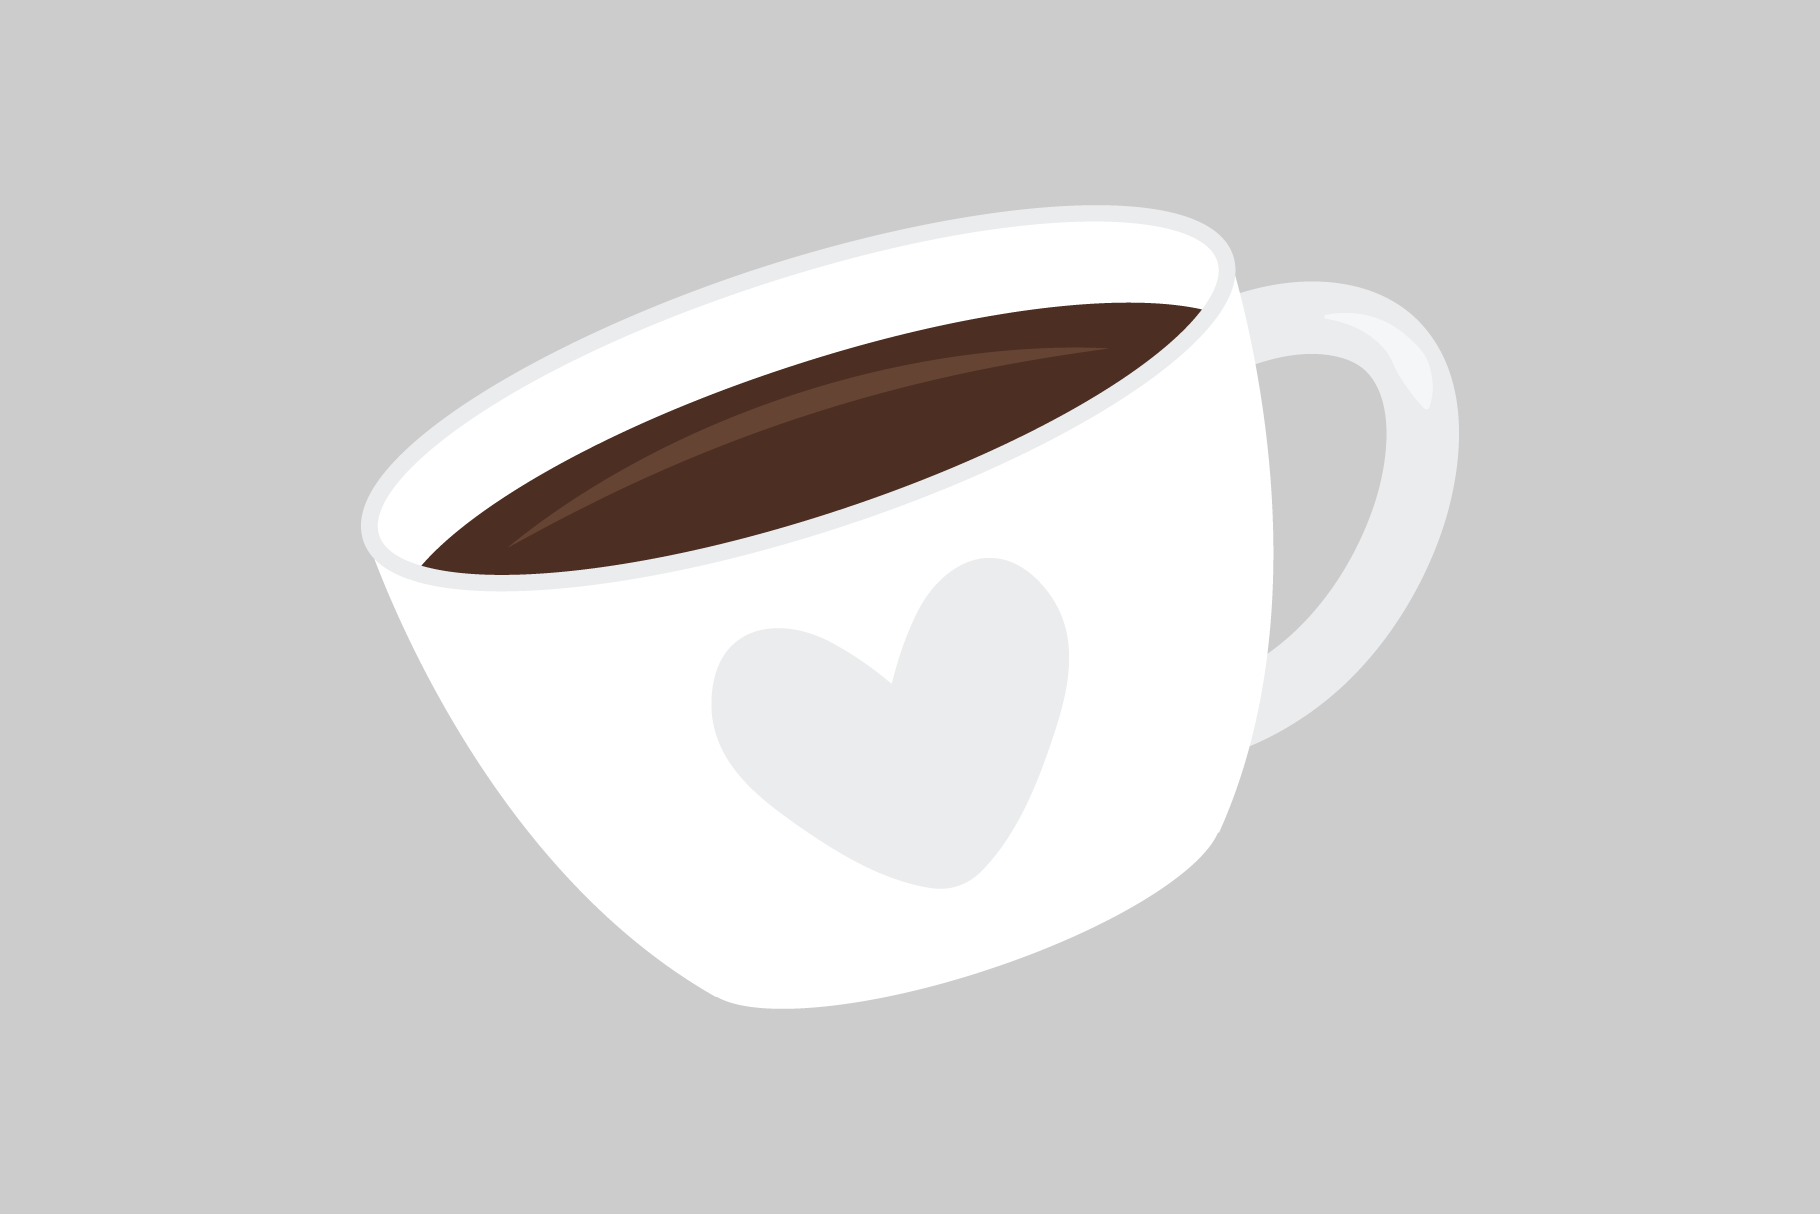 coffee cup clip art